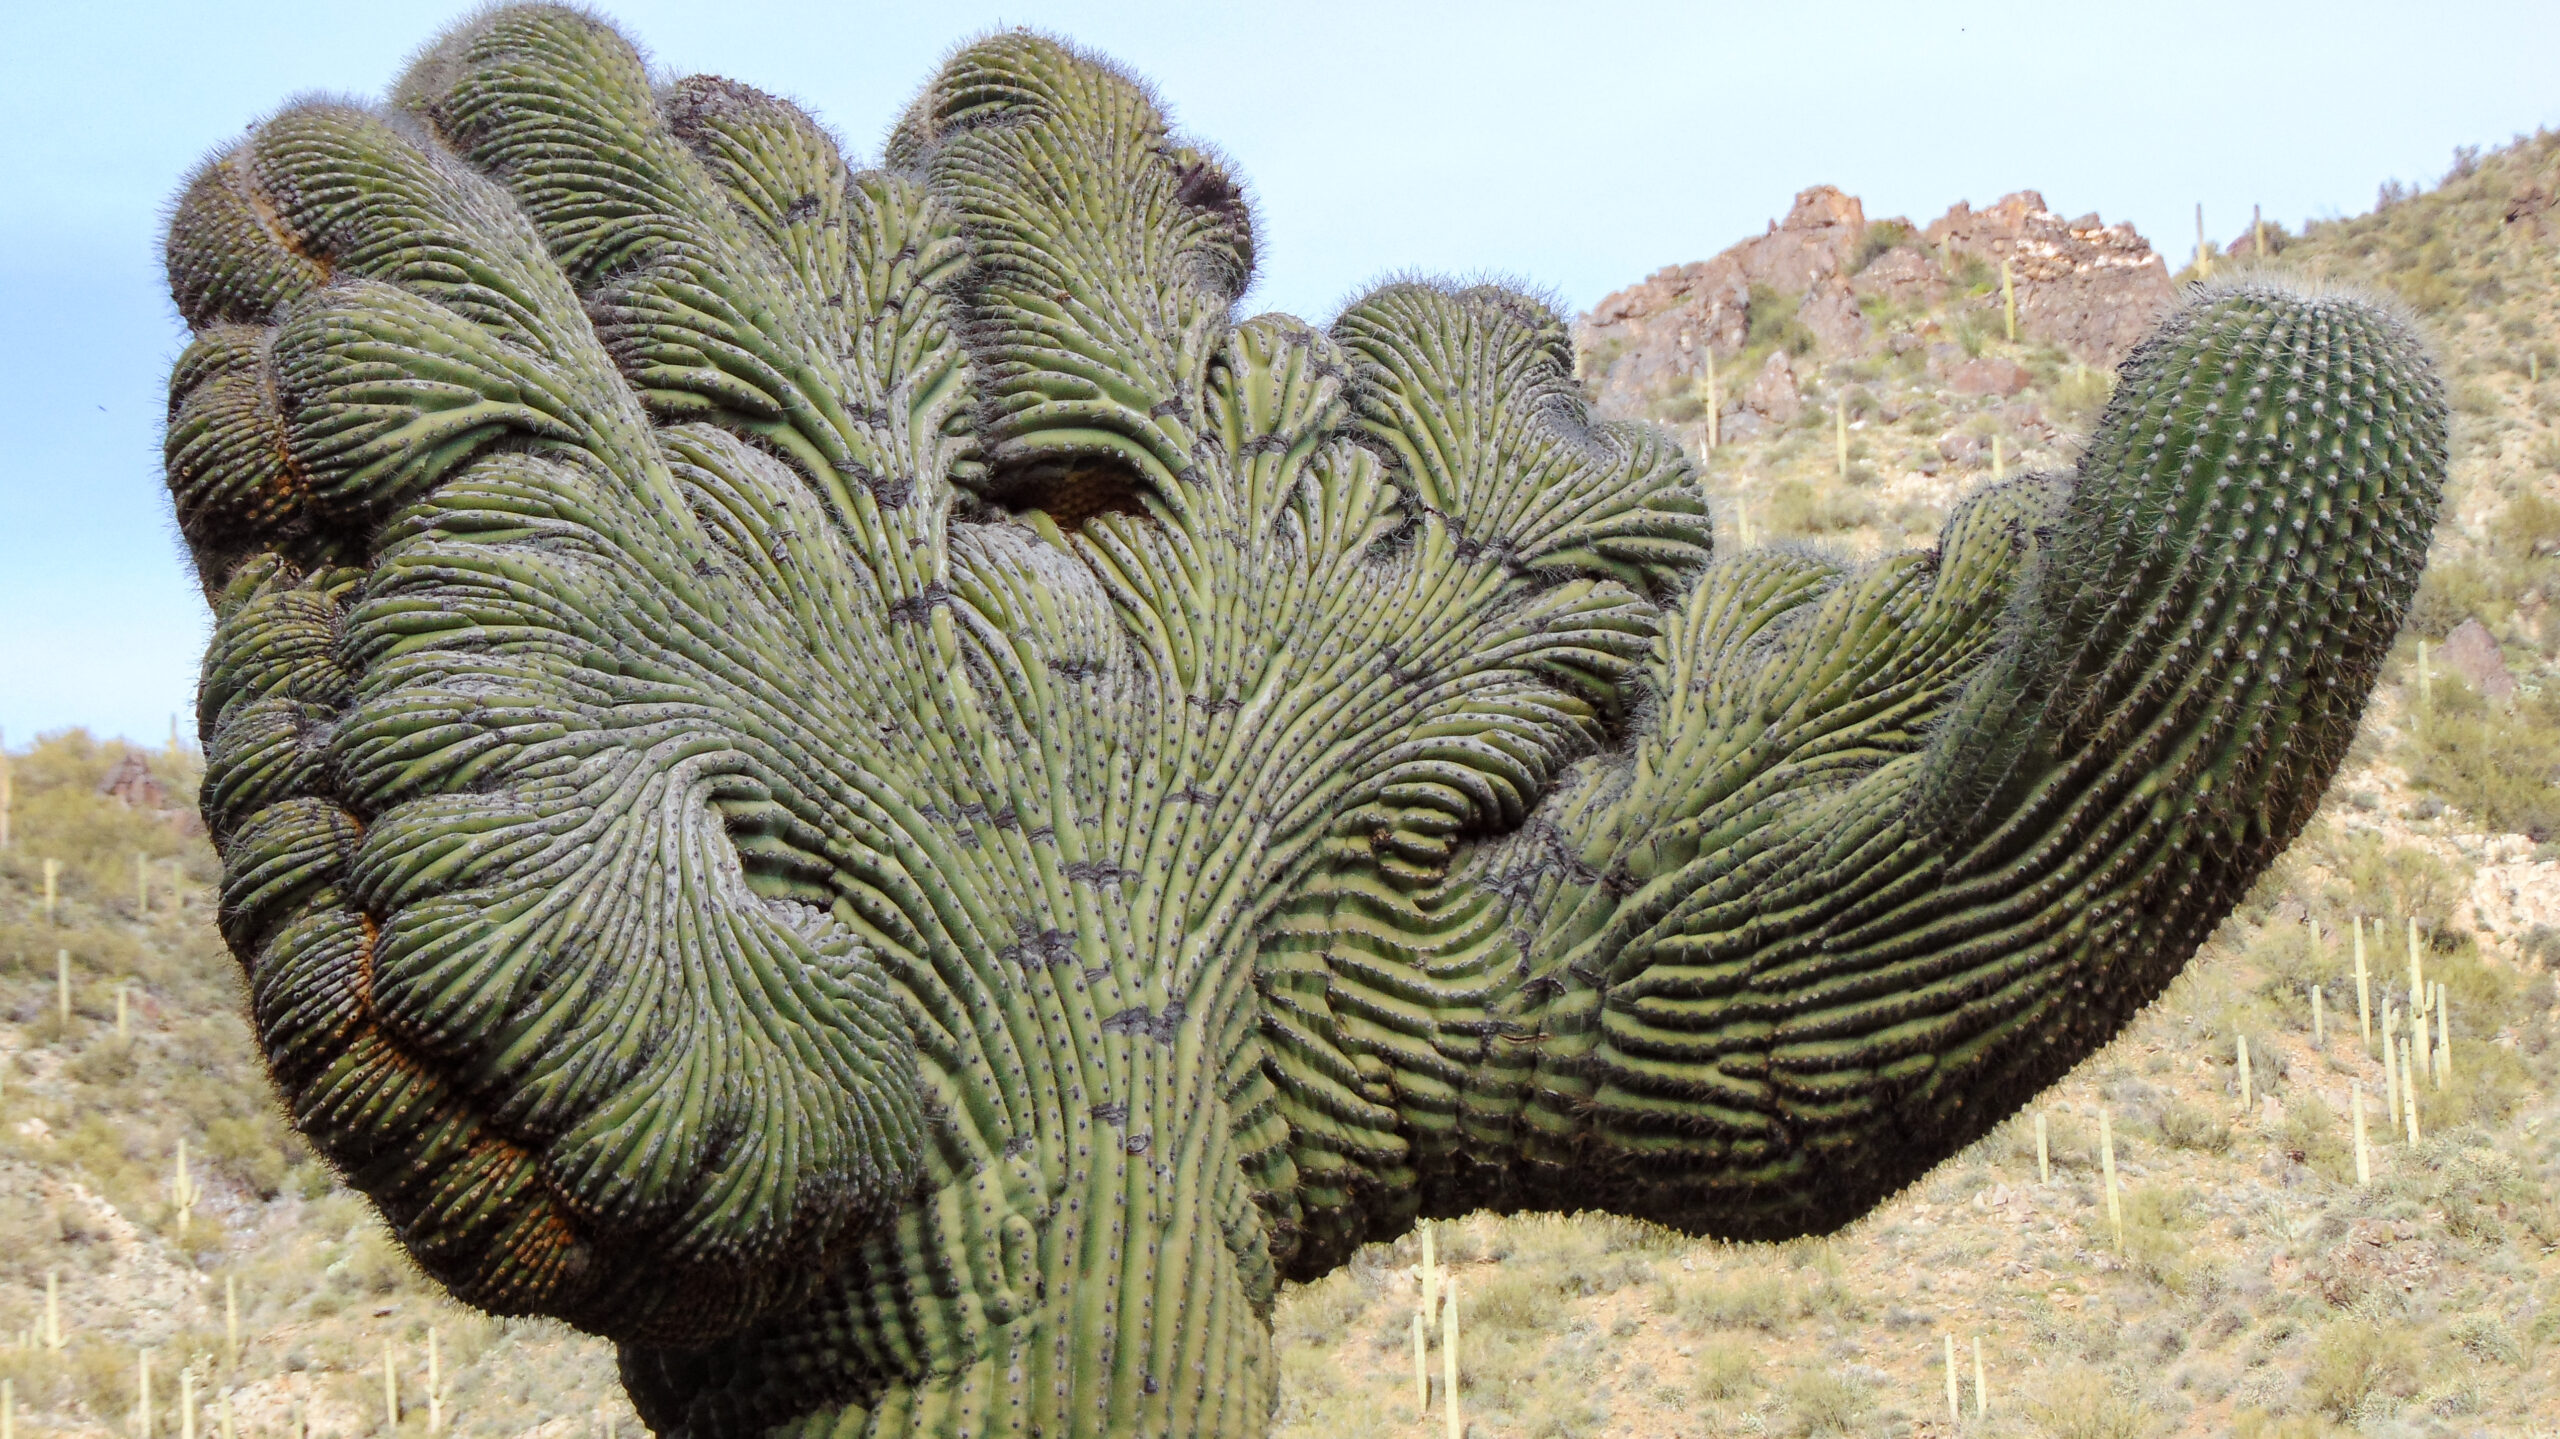 The crested saguaro cactus | Arizona’s majestic beauty